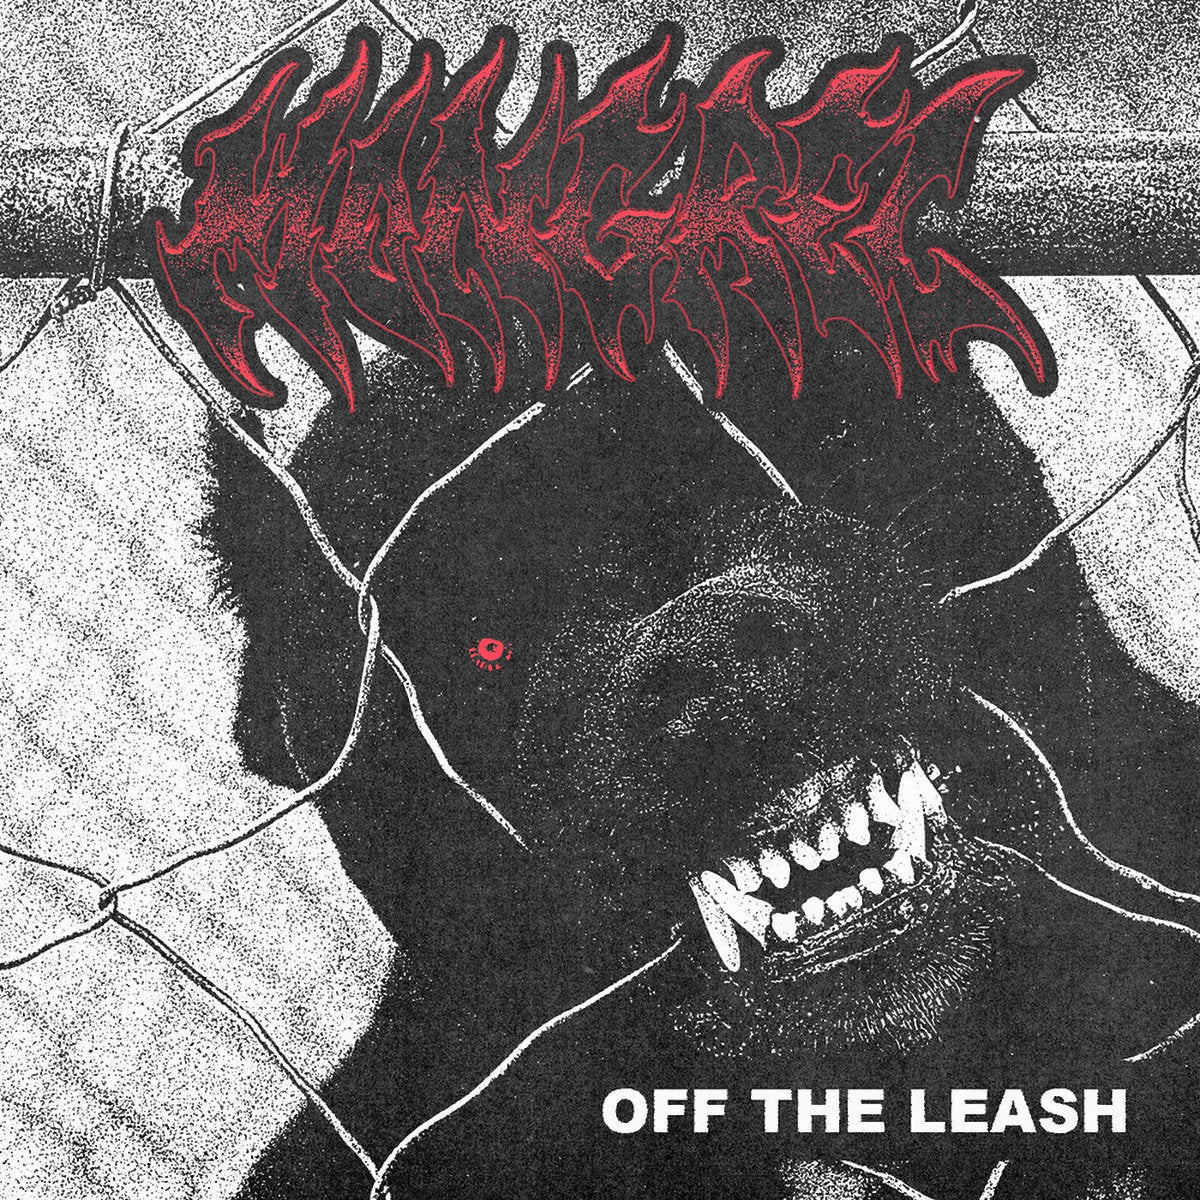 Mongrel "Off The Leash" 12" Vinyl